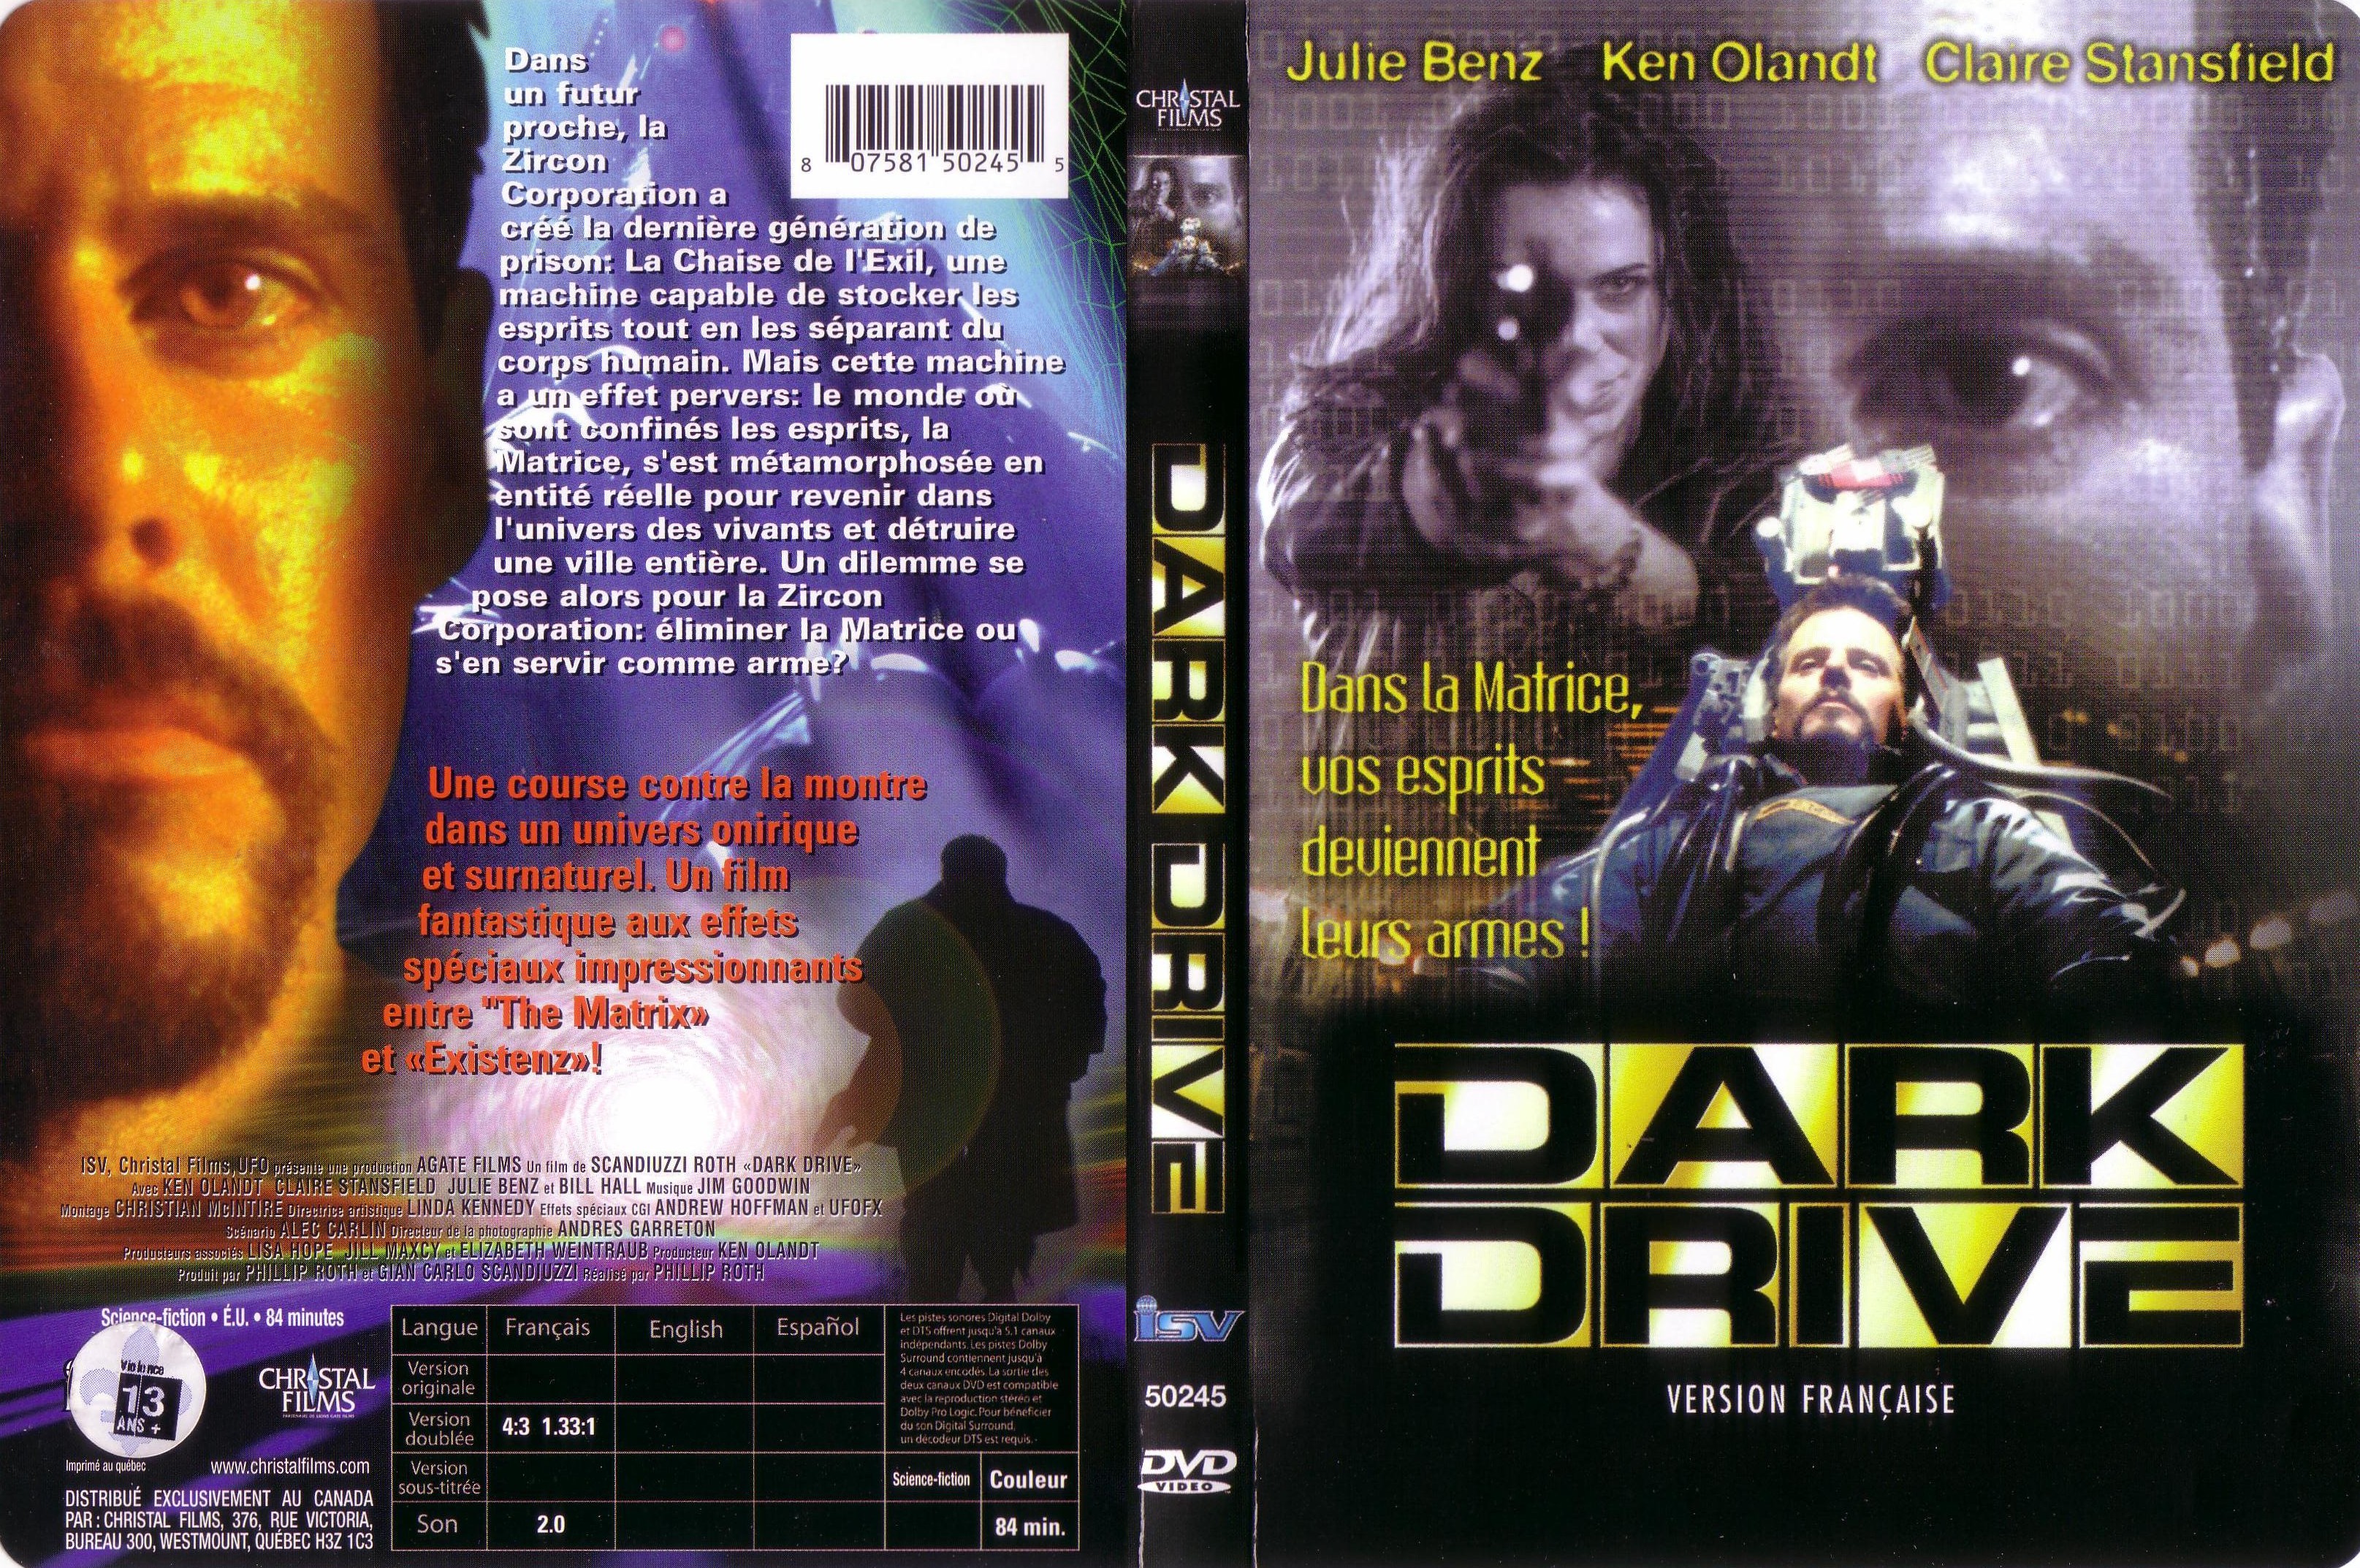 Jaquette DVD Dark drive